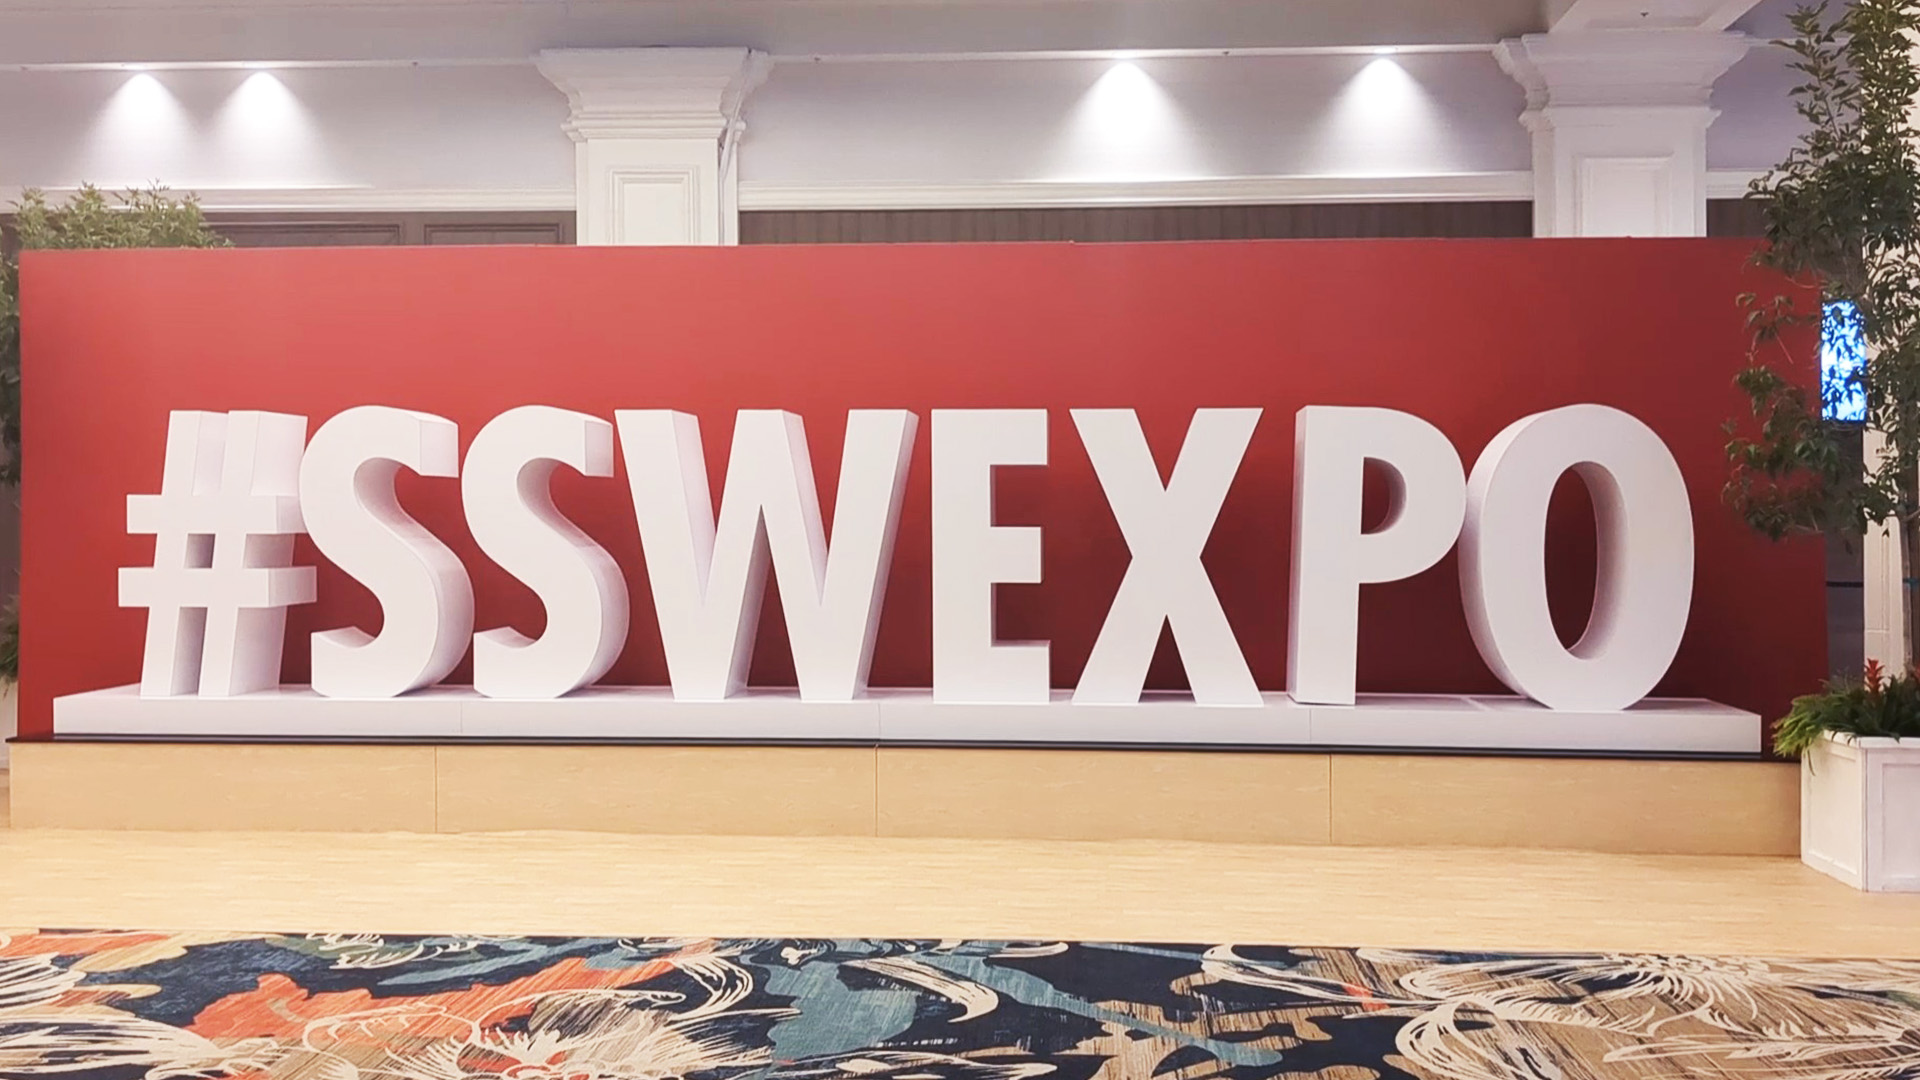 #SSWEXPO Sign